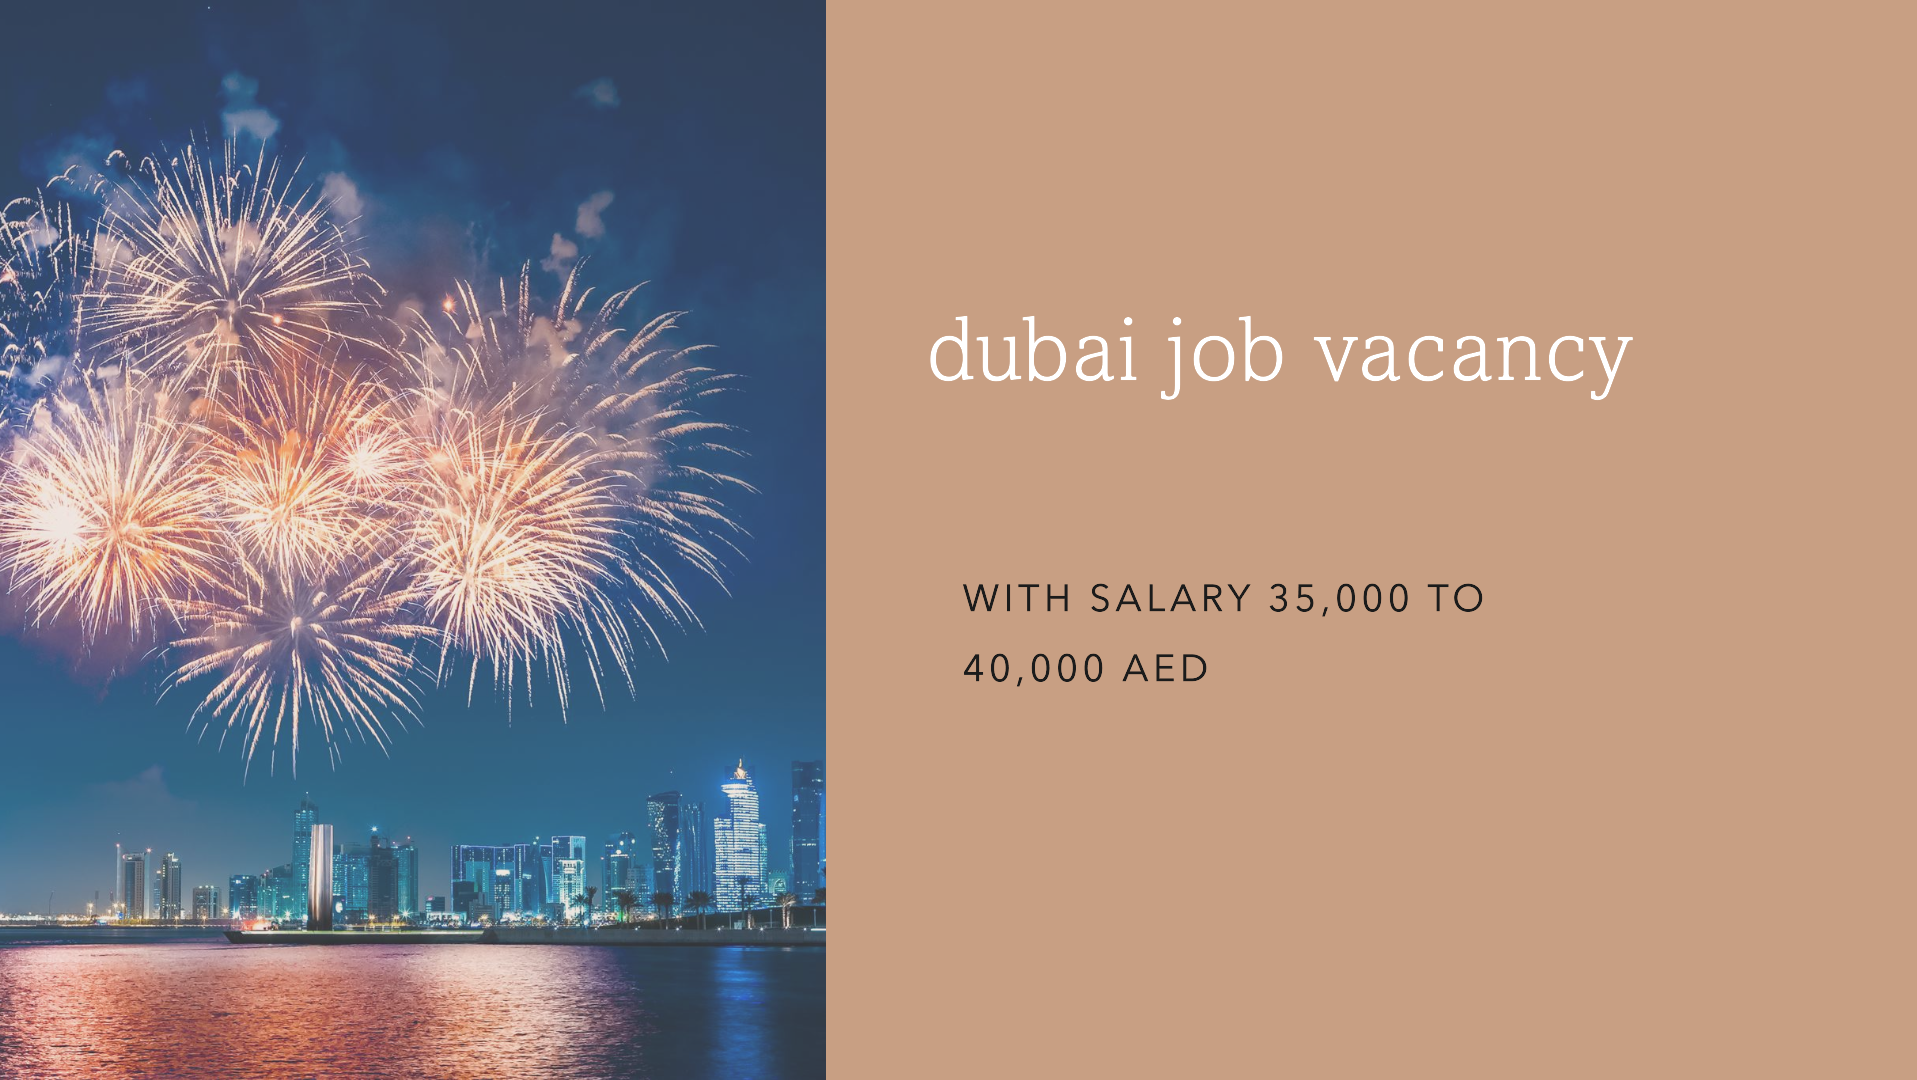 dubai job vacancy with salary 35,000 to 40,000 AED